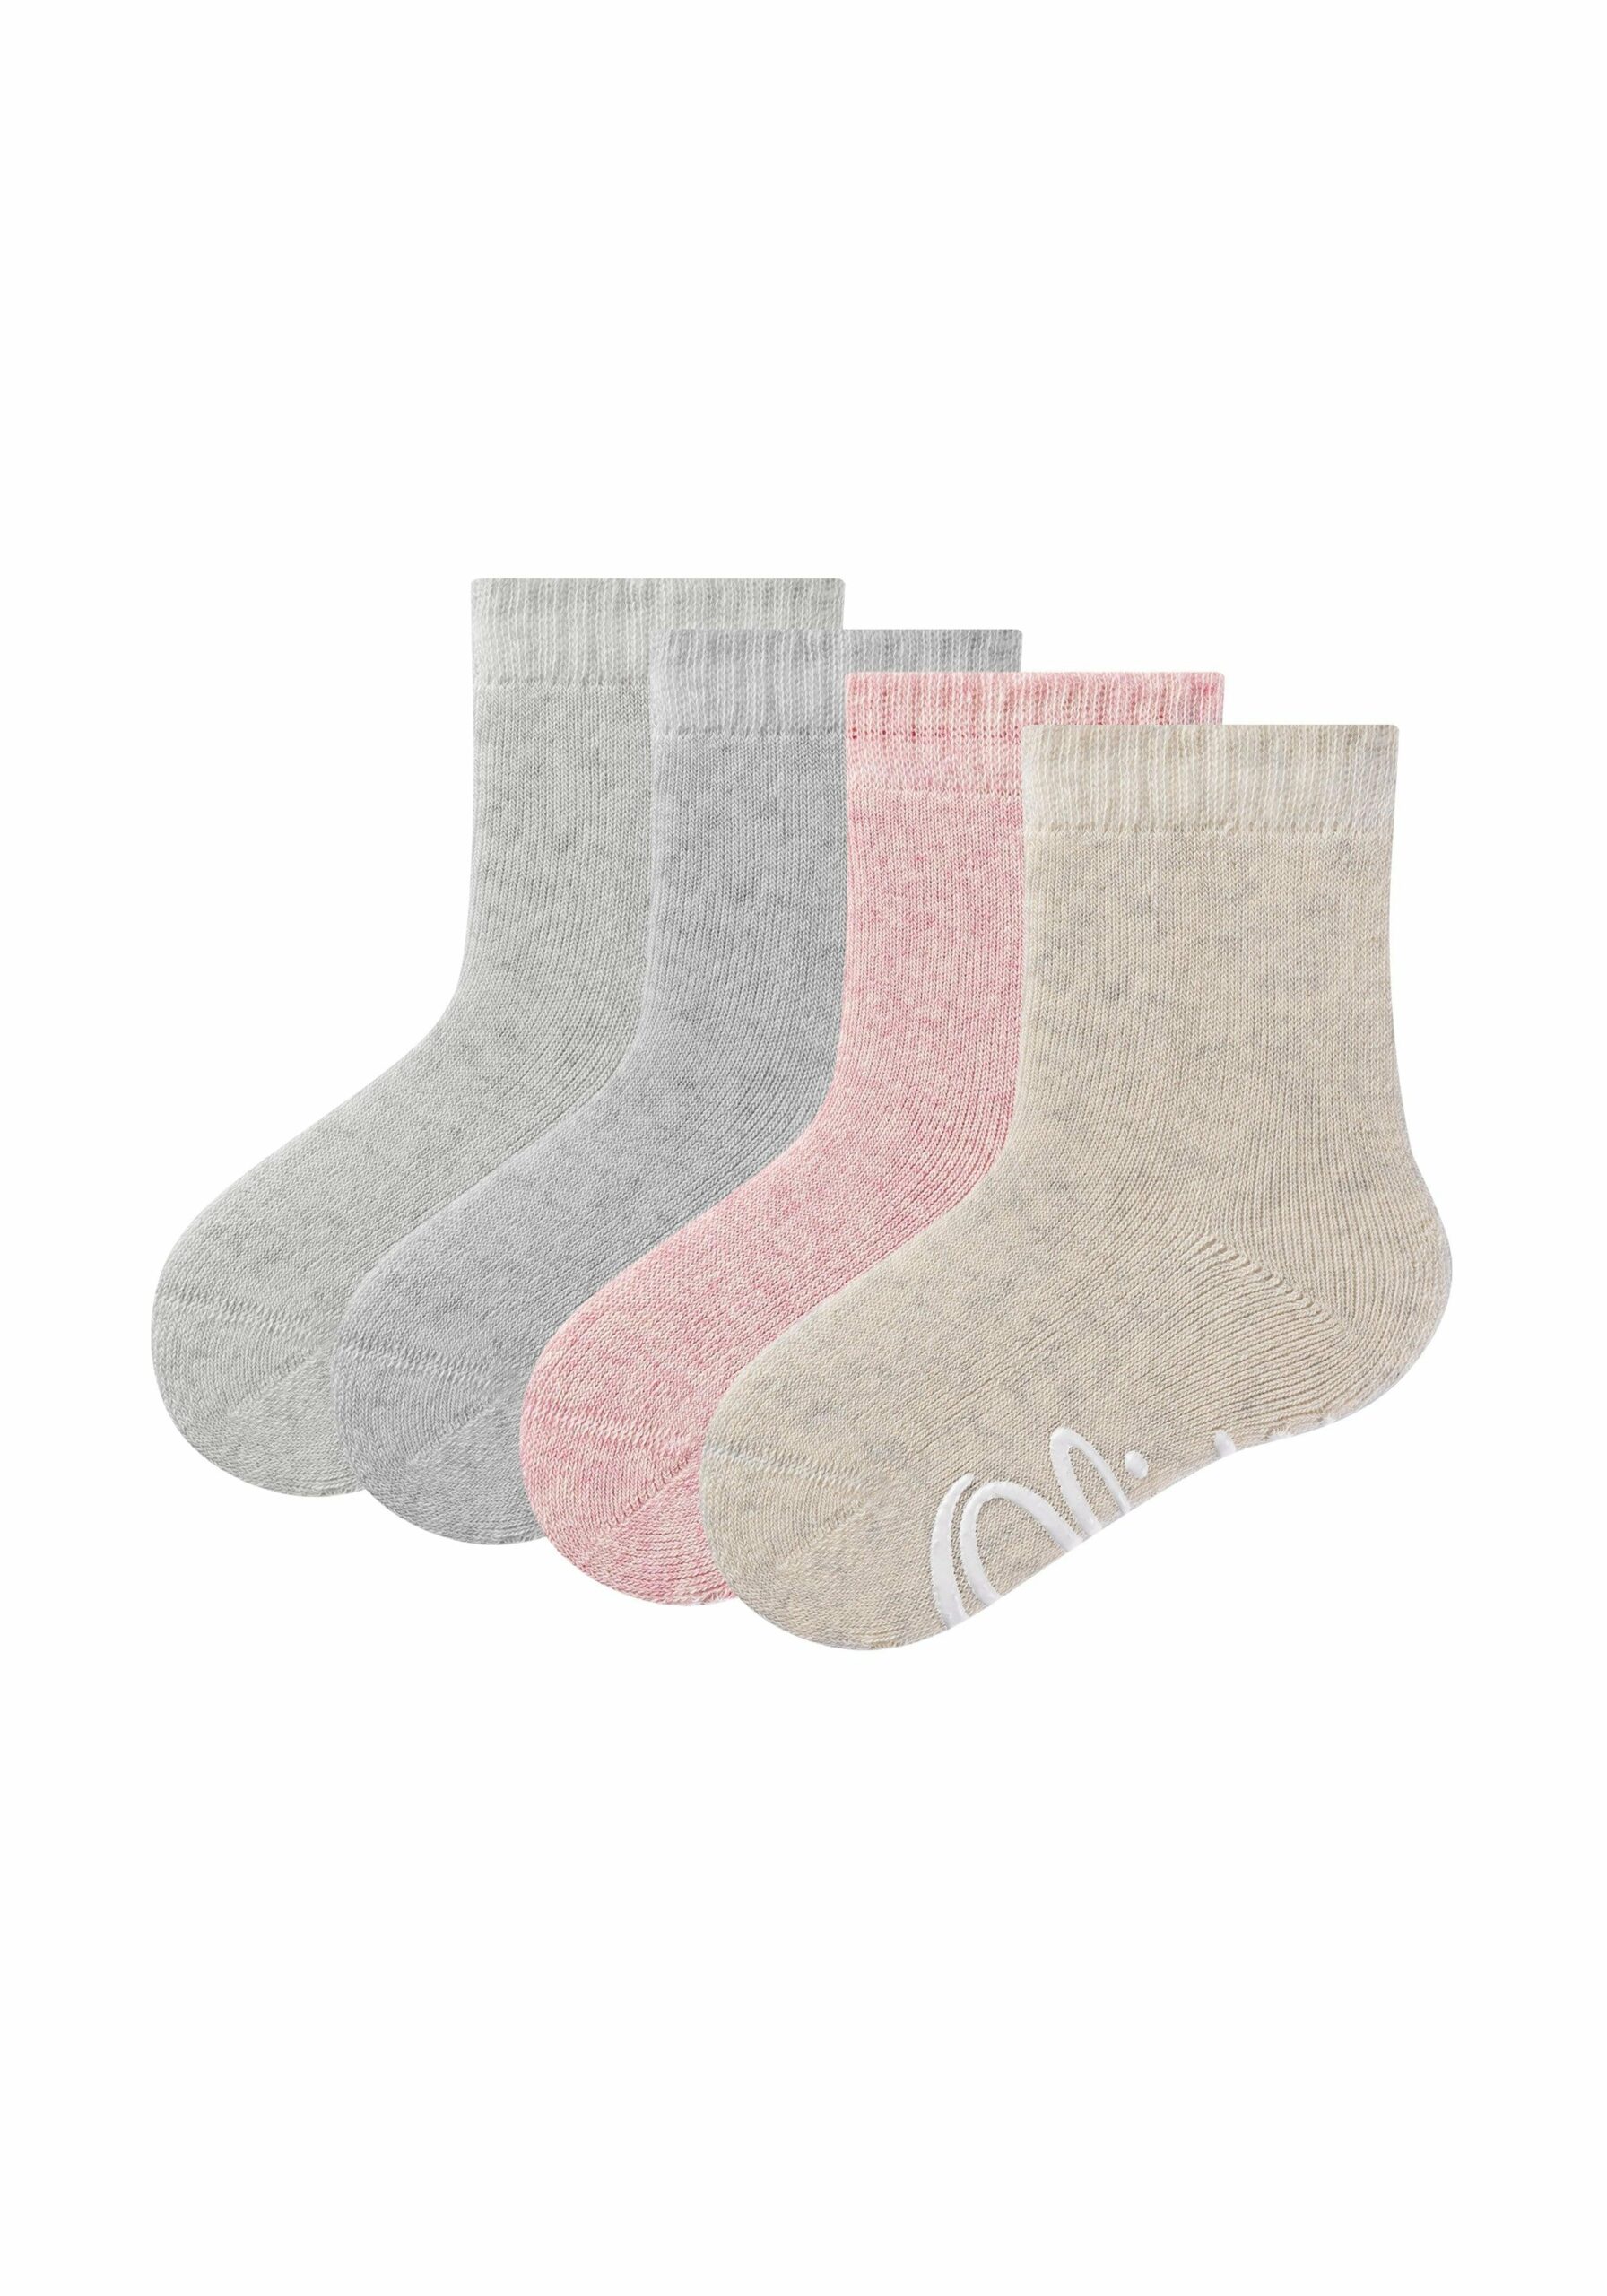 s.Oliver Kinder bei Originals kaufen ABS-Socken rosé 4er Bio-Baumwolle melange Pack